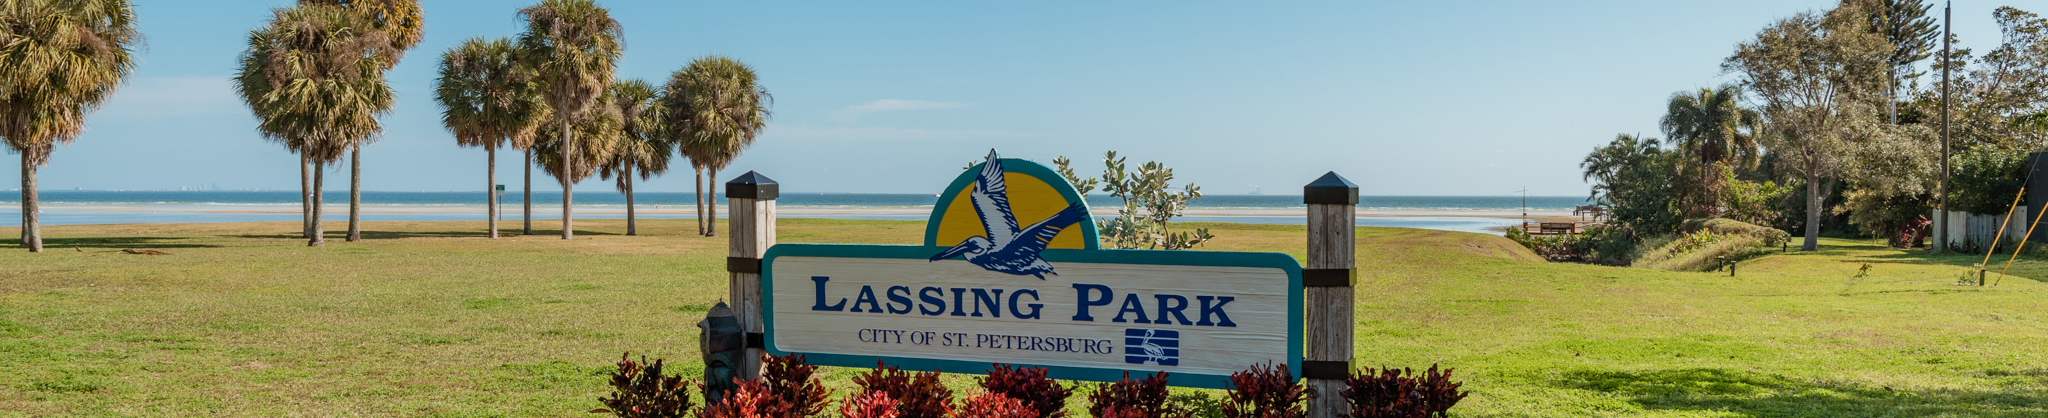 Lassing Park Sign